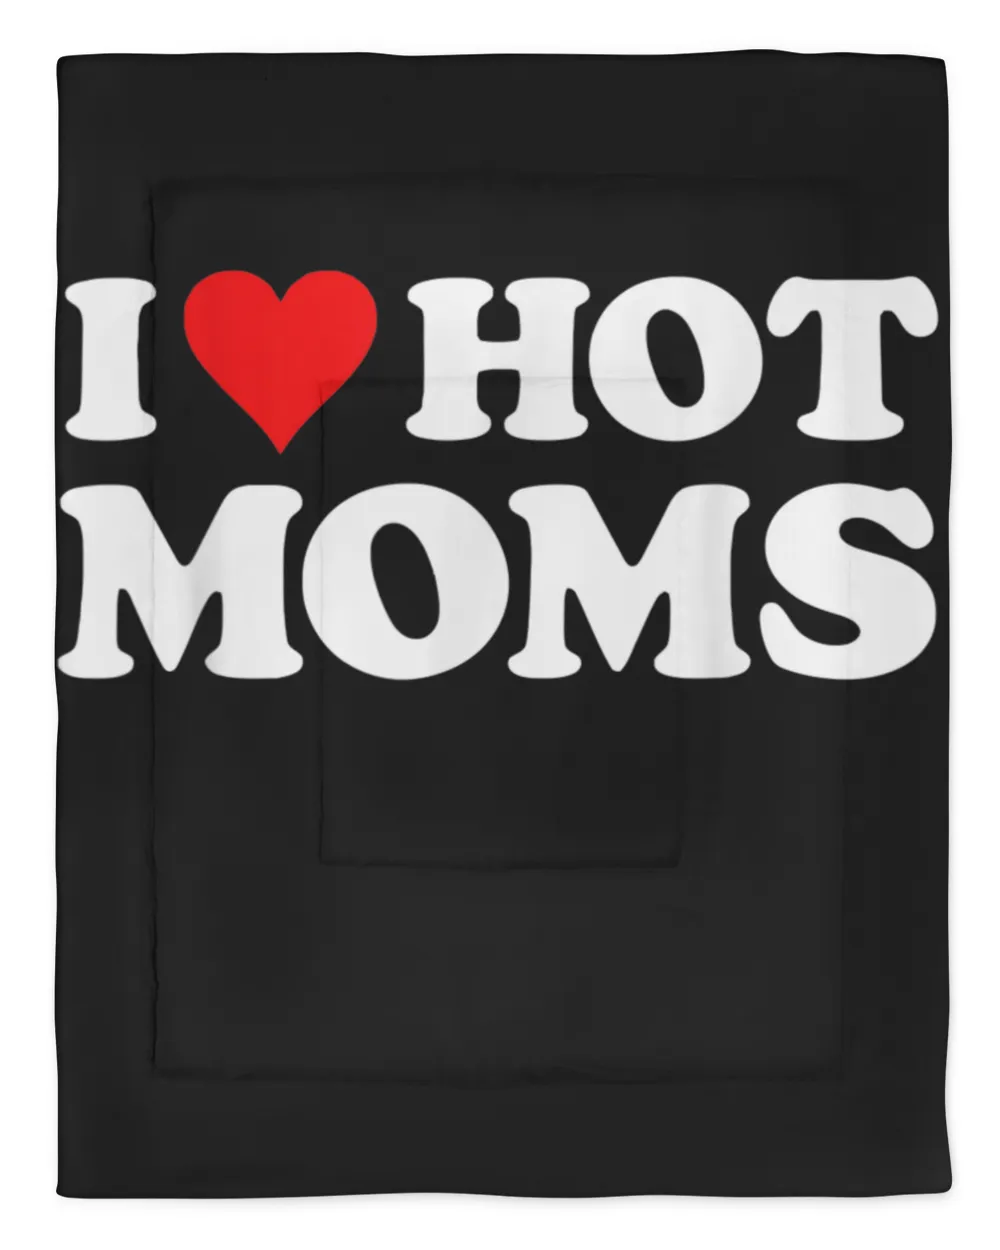 I Love Hot Moms Tshirt Funny Red Heart Love Moms